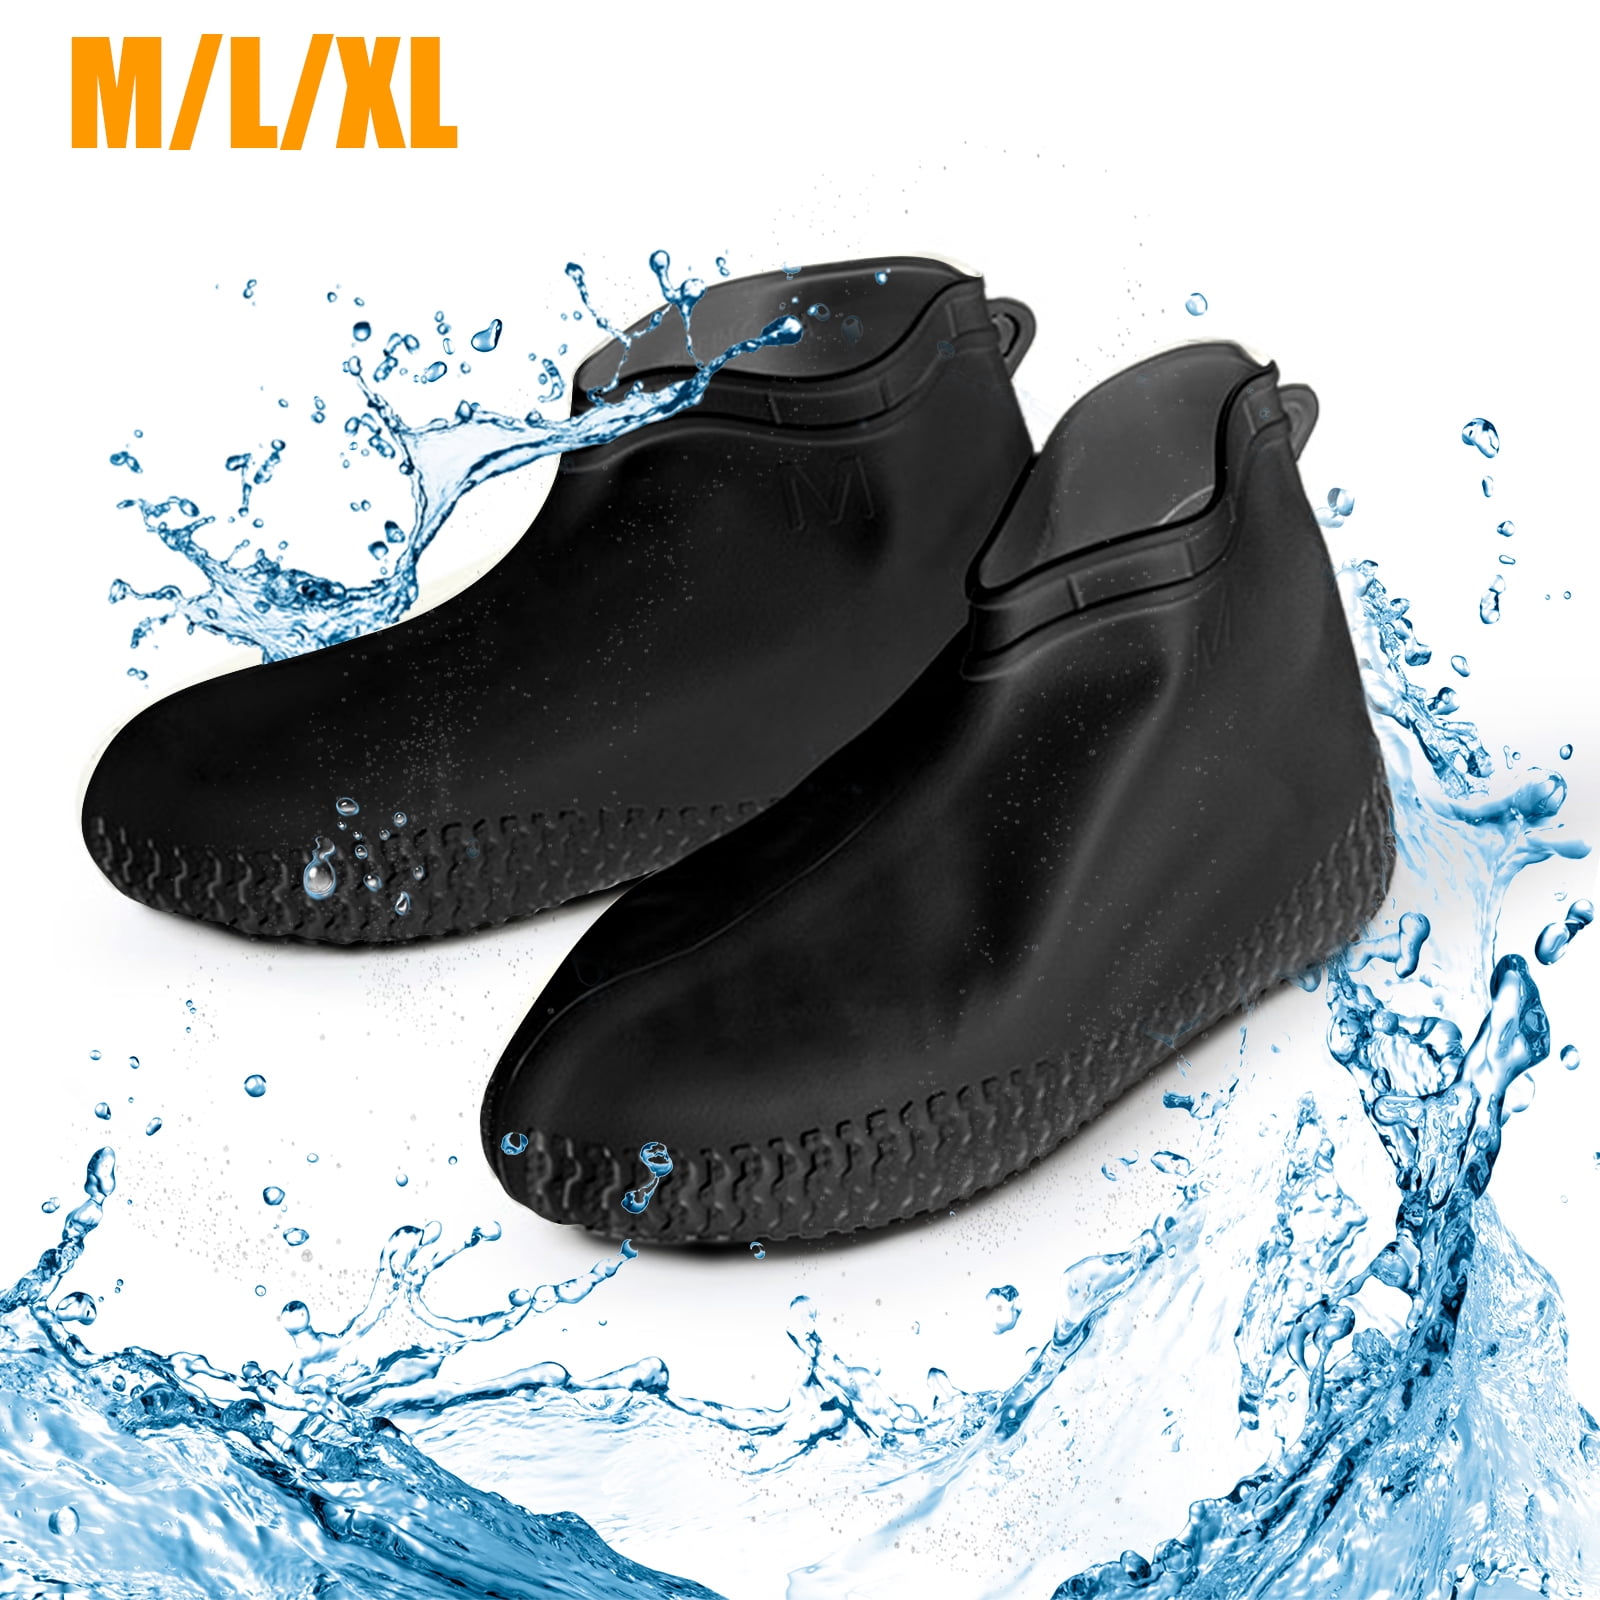 Waterproof Non Slip Shoe Covers Outdoor Rain Shoes Protective Reusable Zippered 